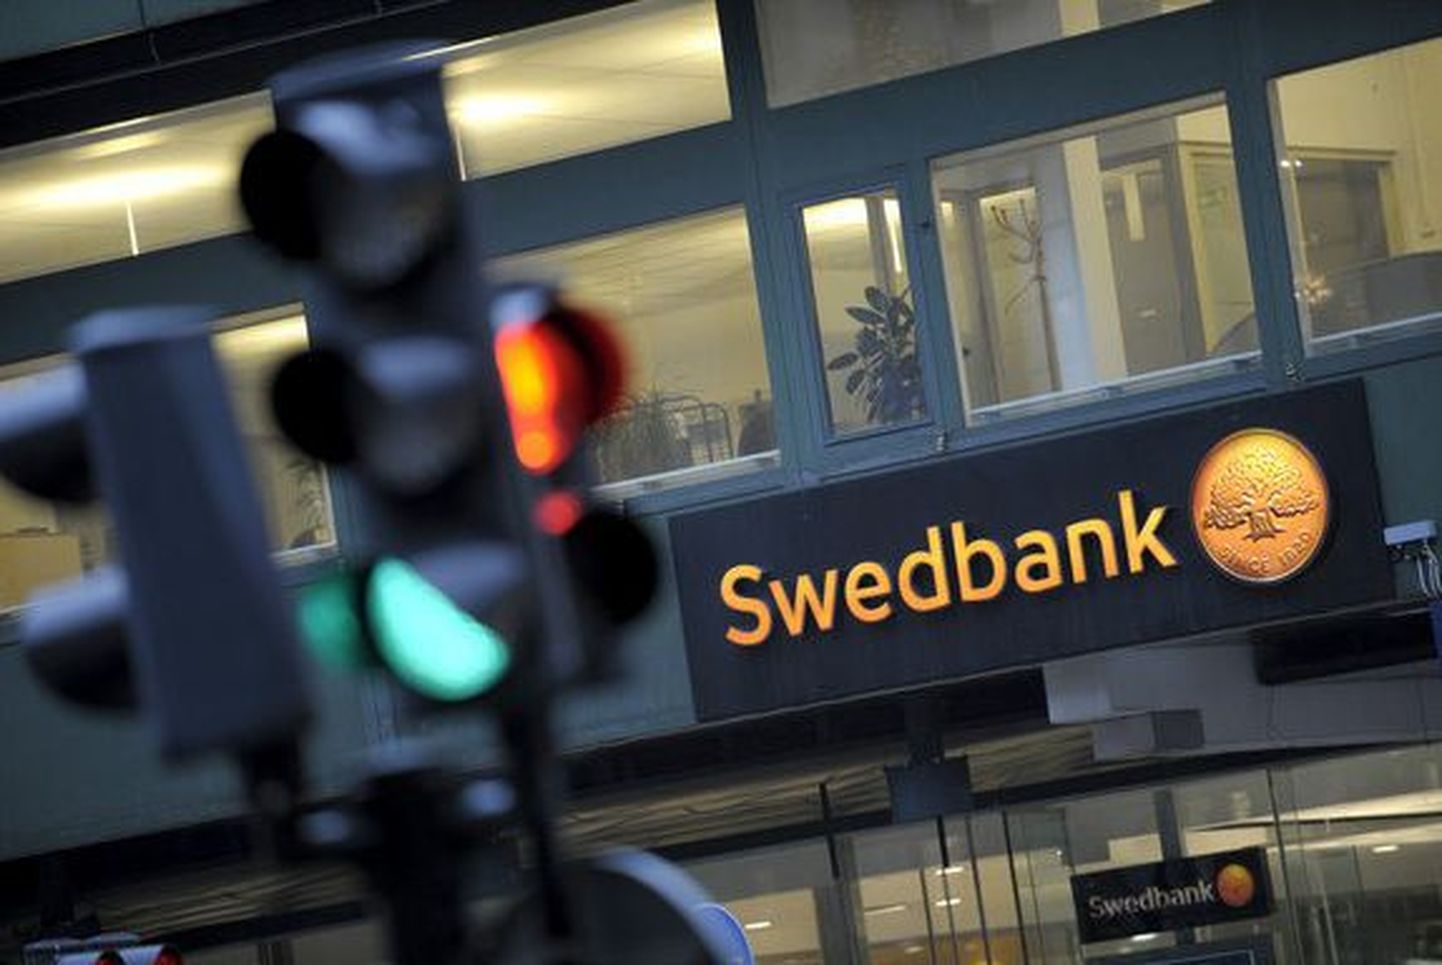 Swedbanki logo.